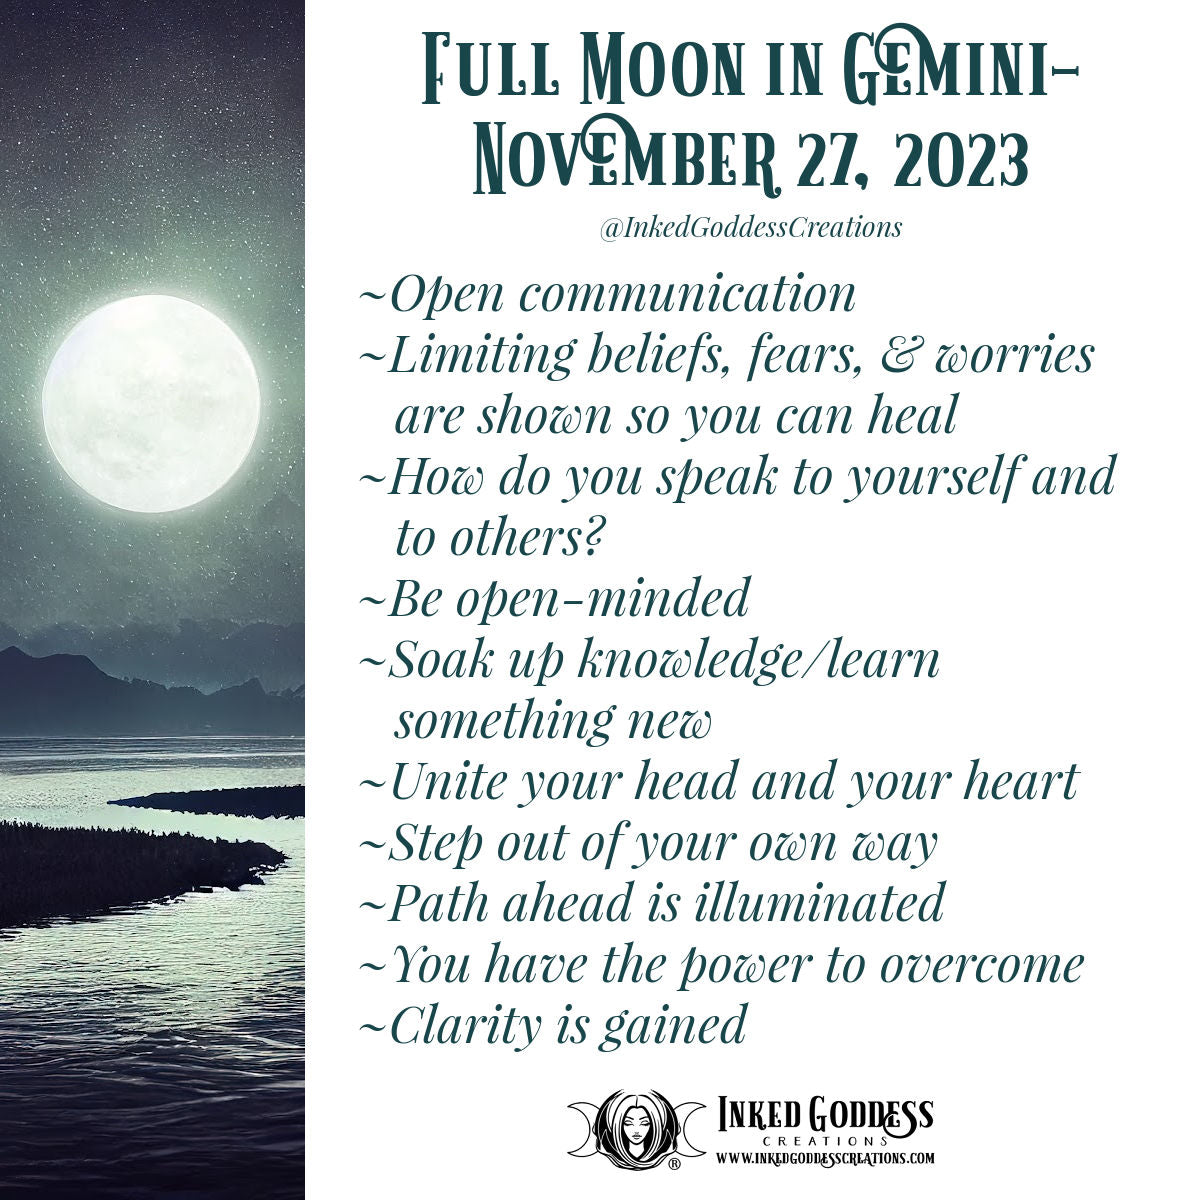 Full Moon in Gemini- November 27, 2023